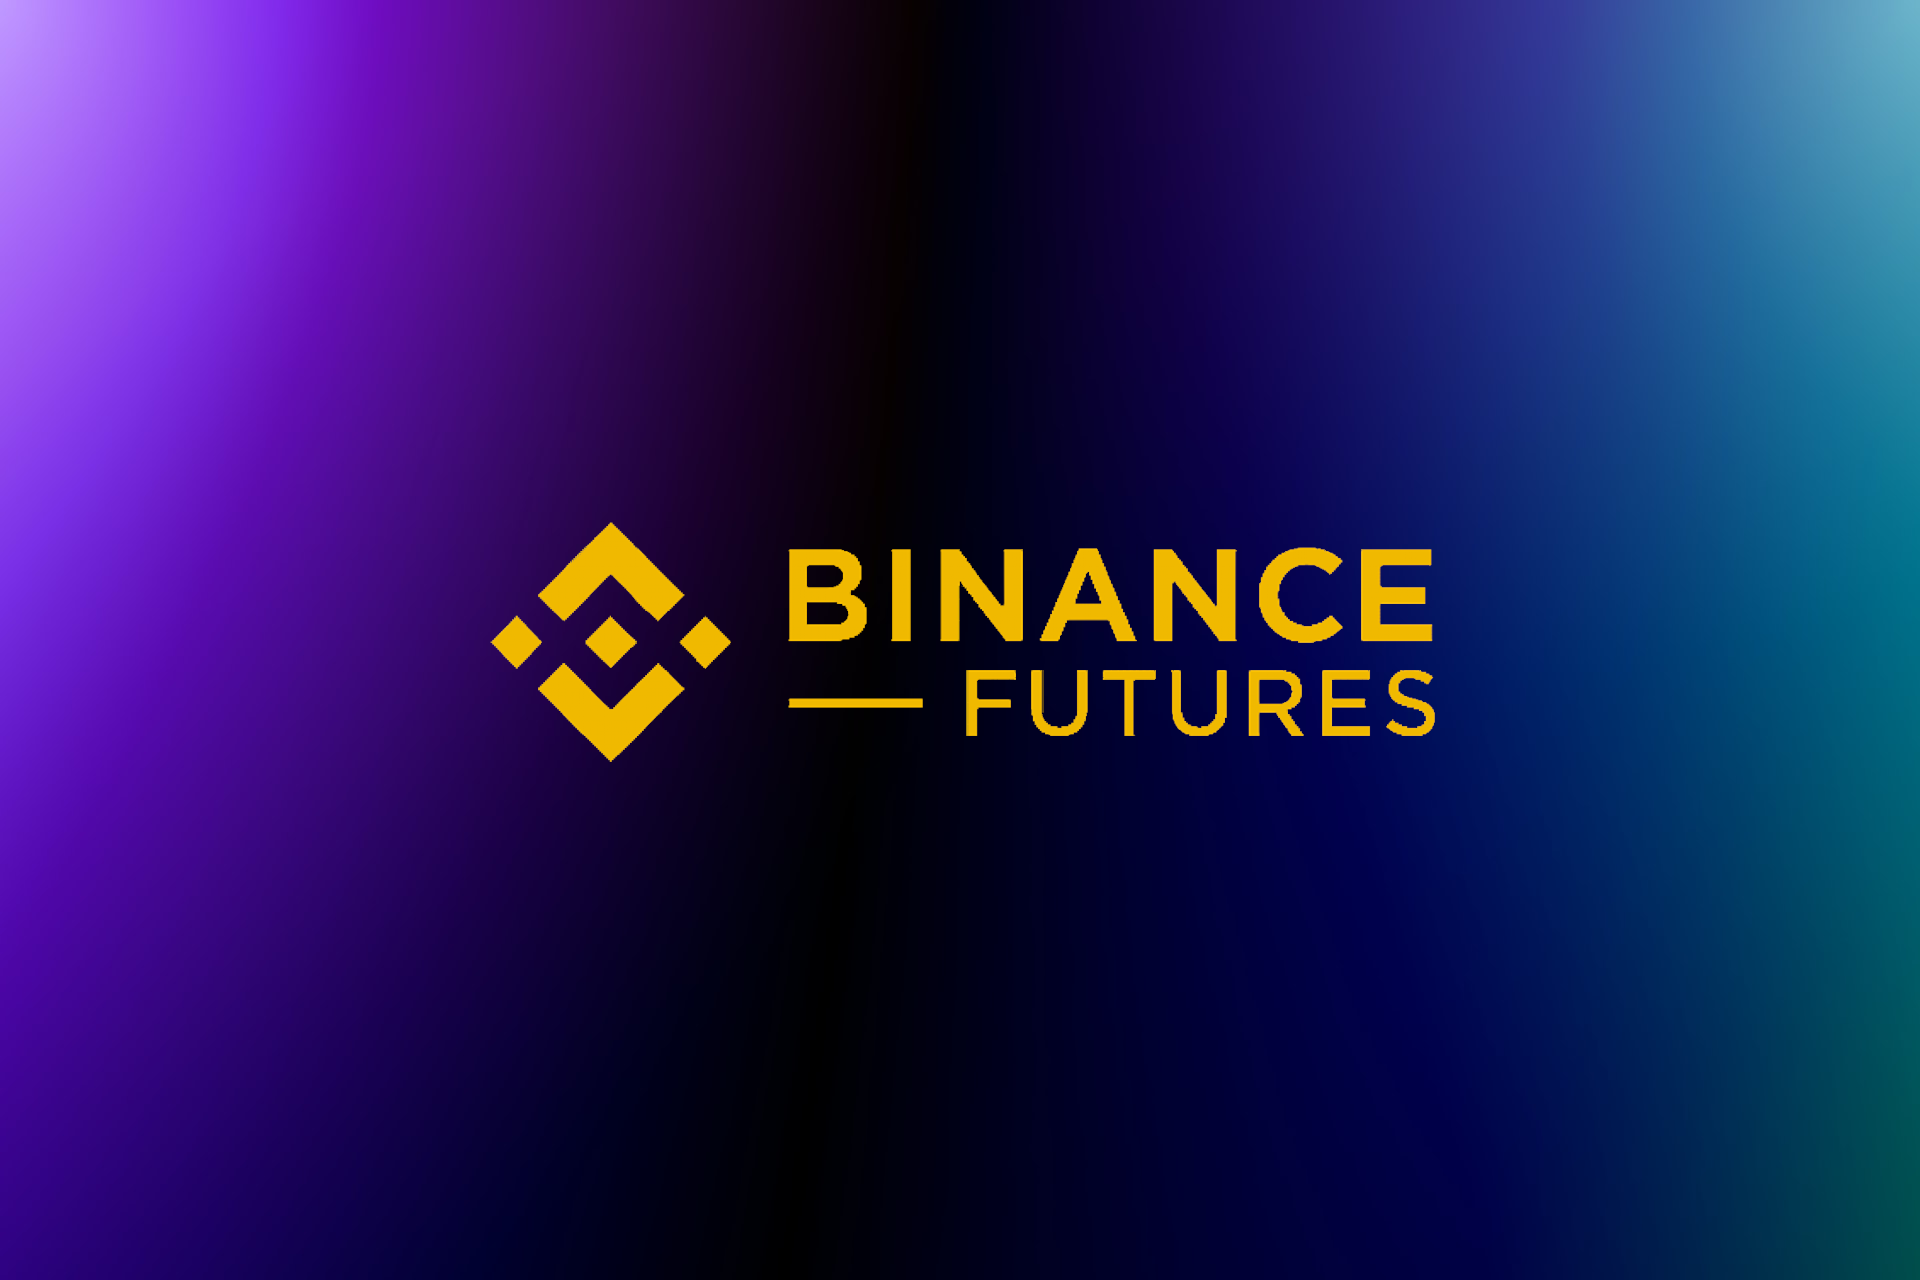 Binance Futures cryptocurrency exchange